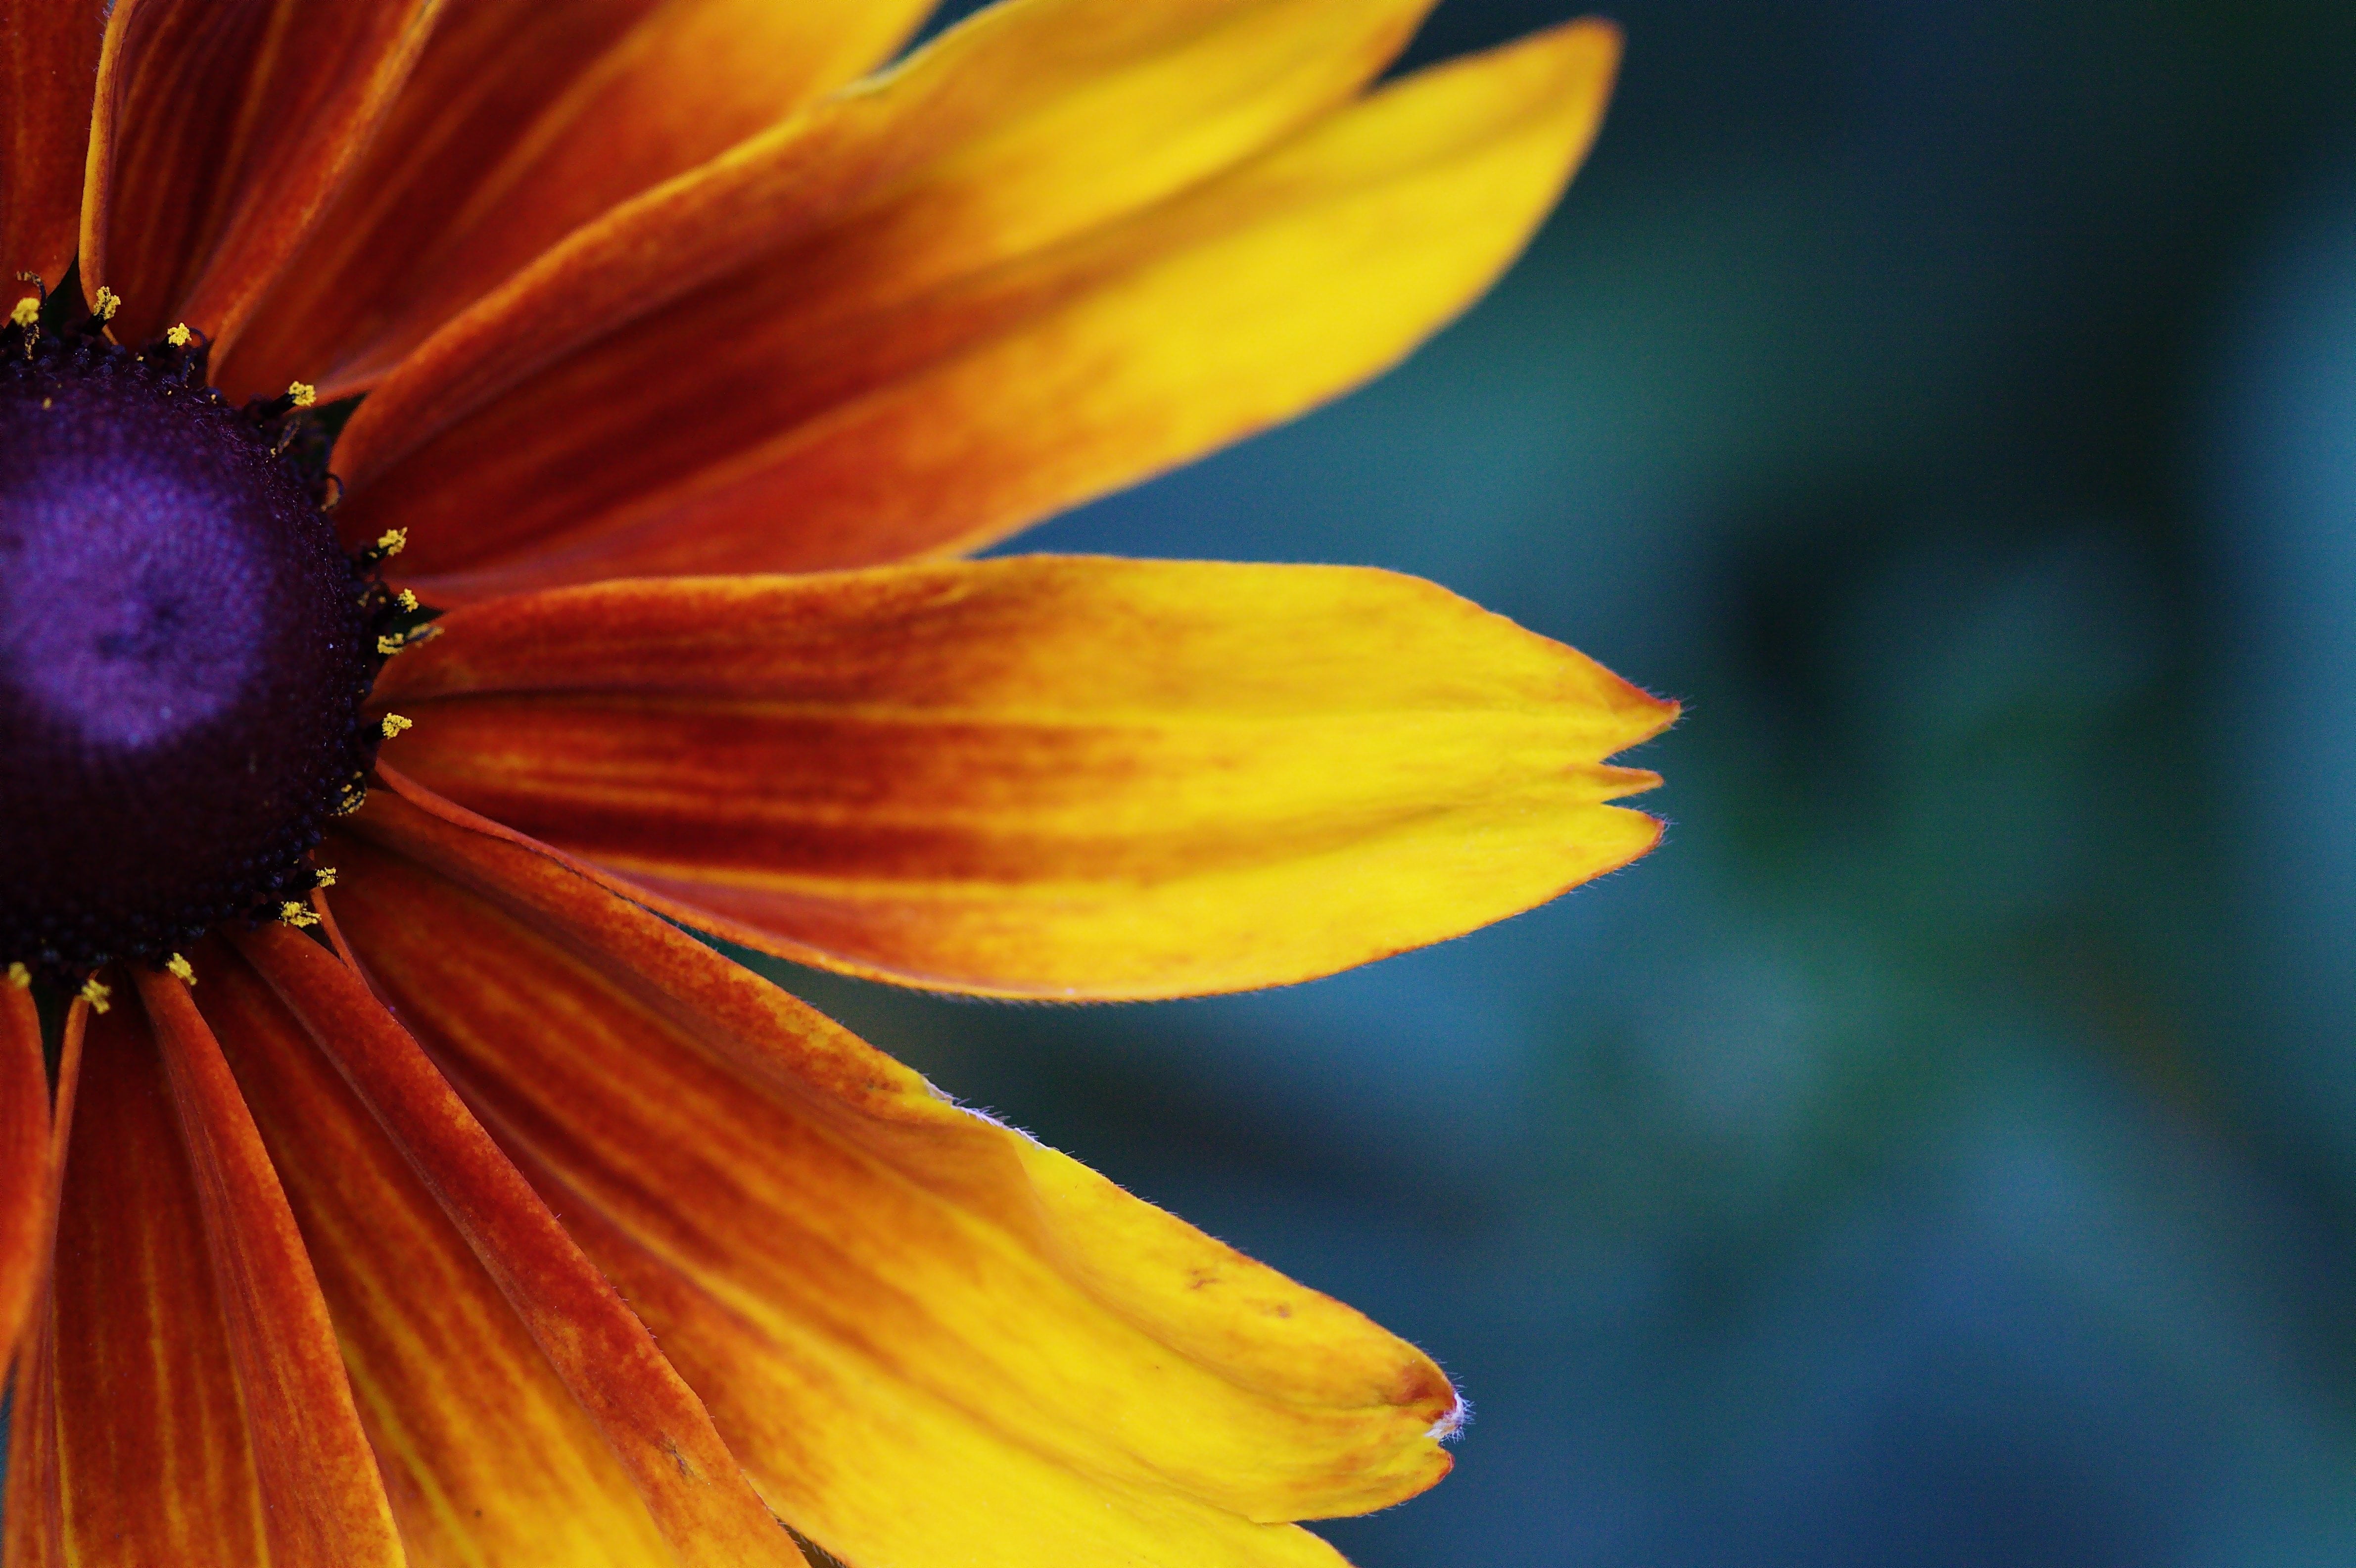 yellow daisy flower closeup photo